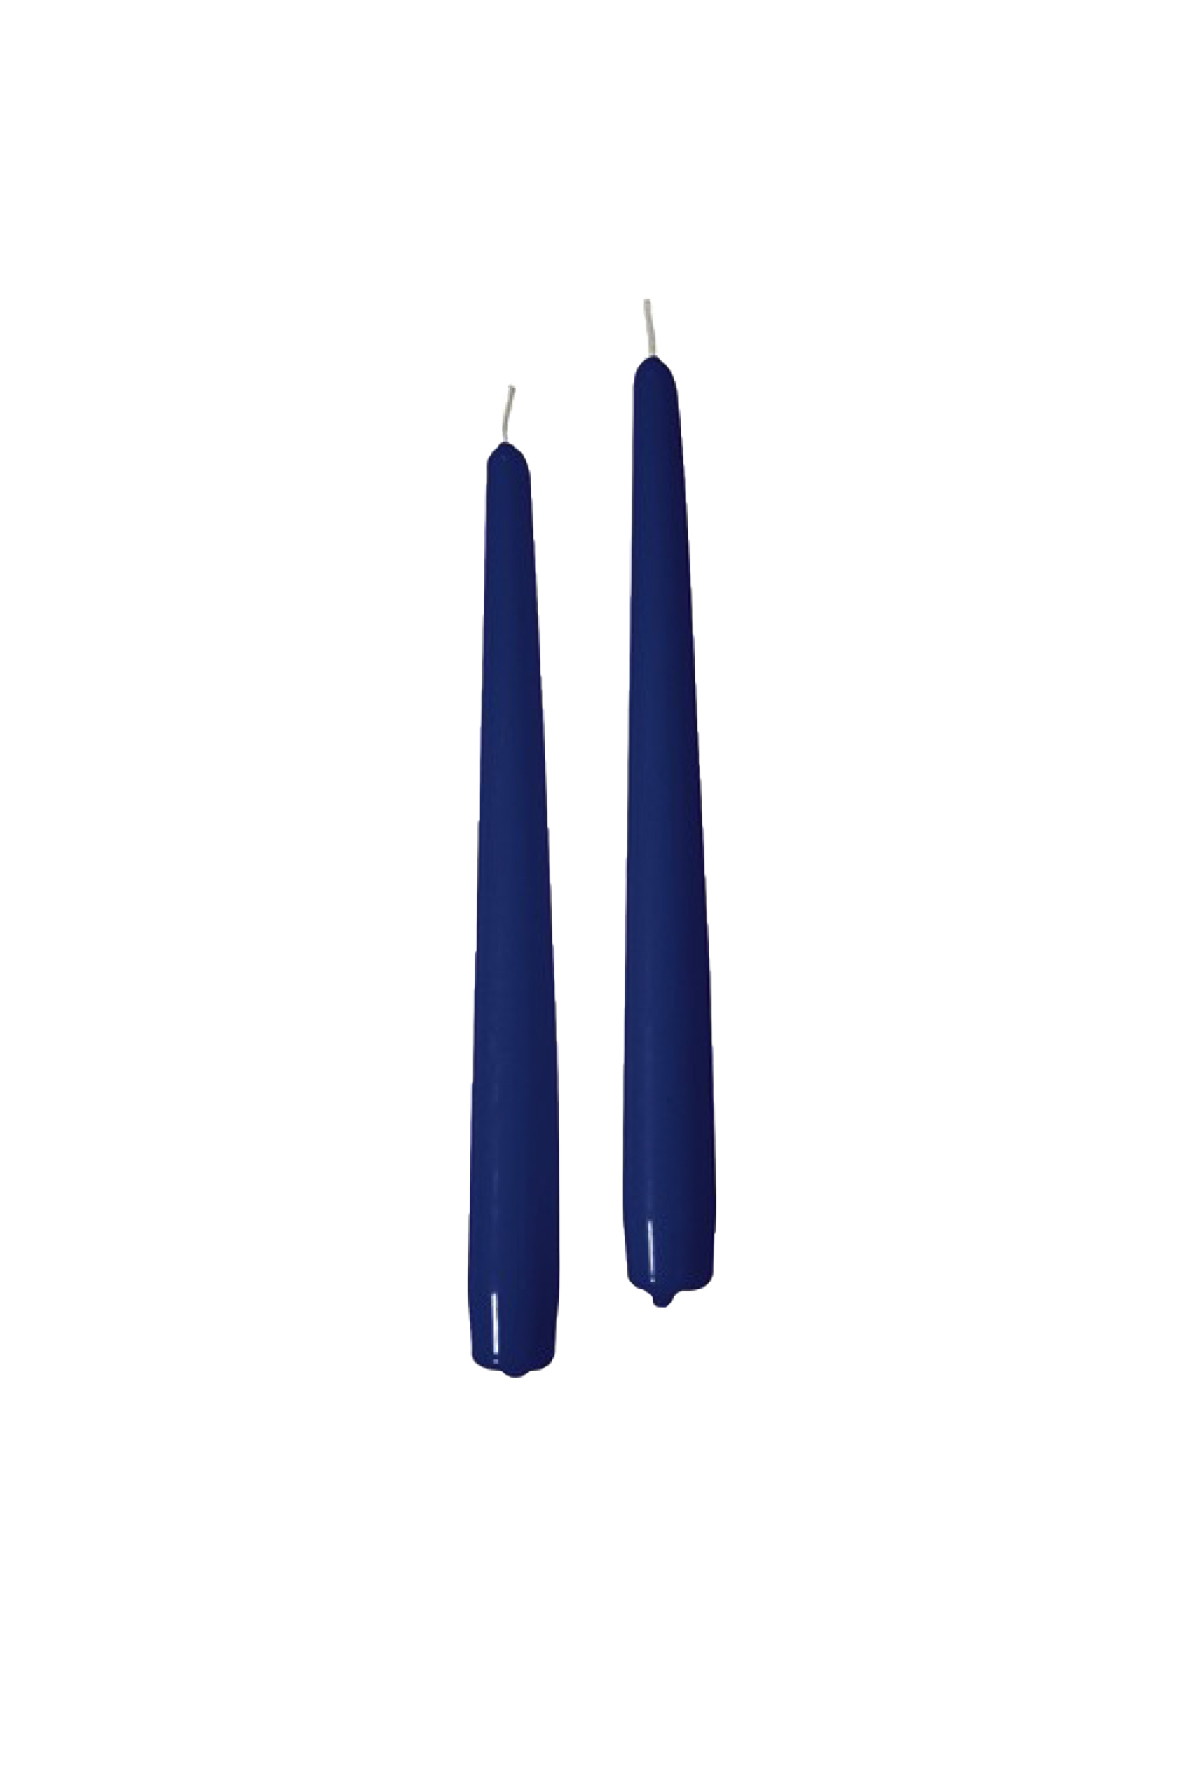 Set 10 Candele coniche Blu Navy (ottima cera Italiana - durata 7,5 ore) 2,2 x h. 25 cm